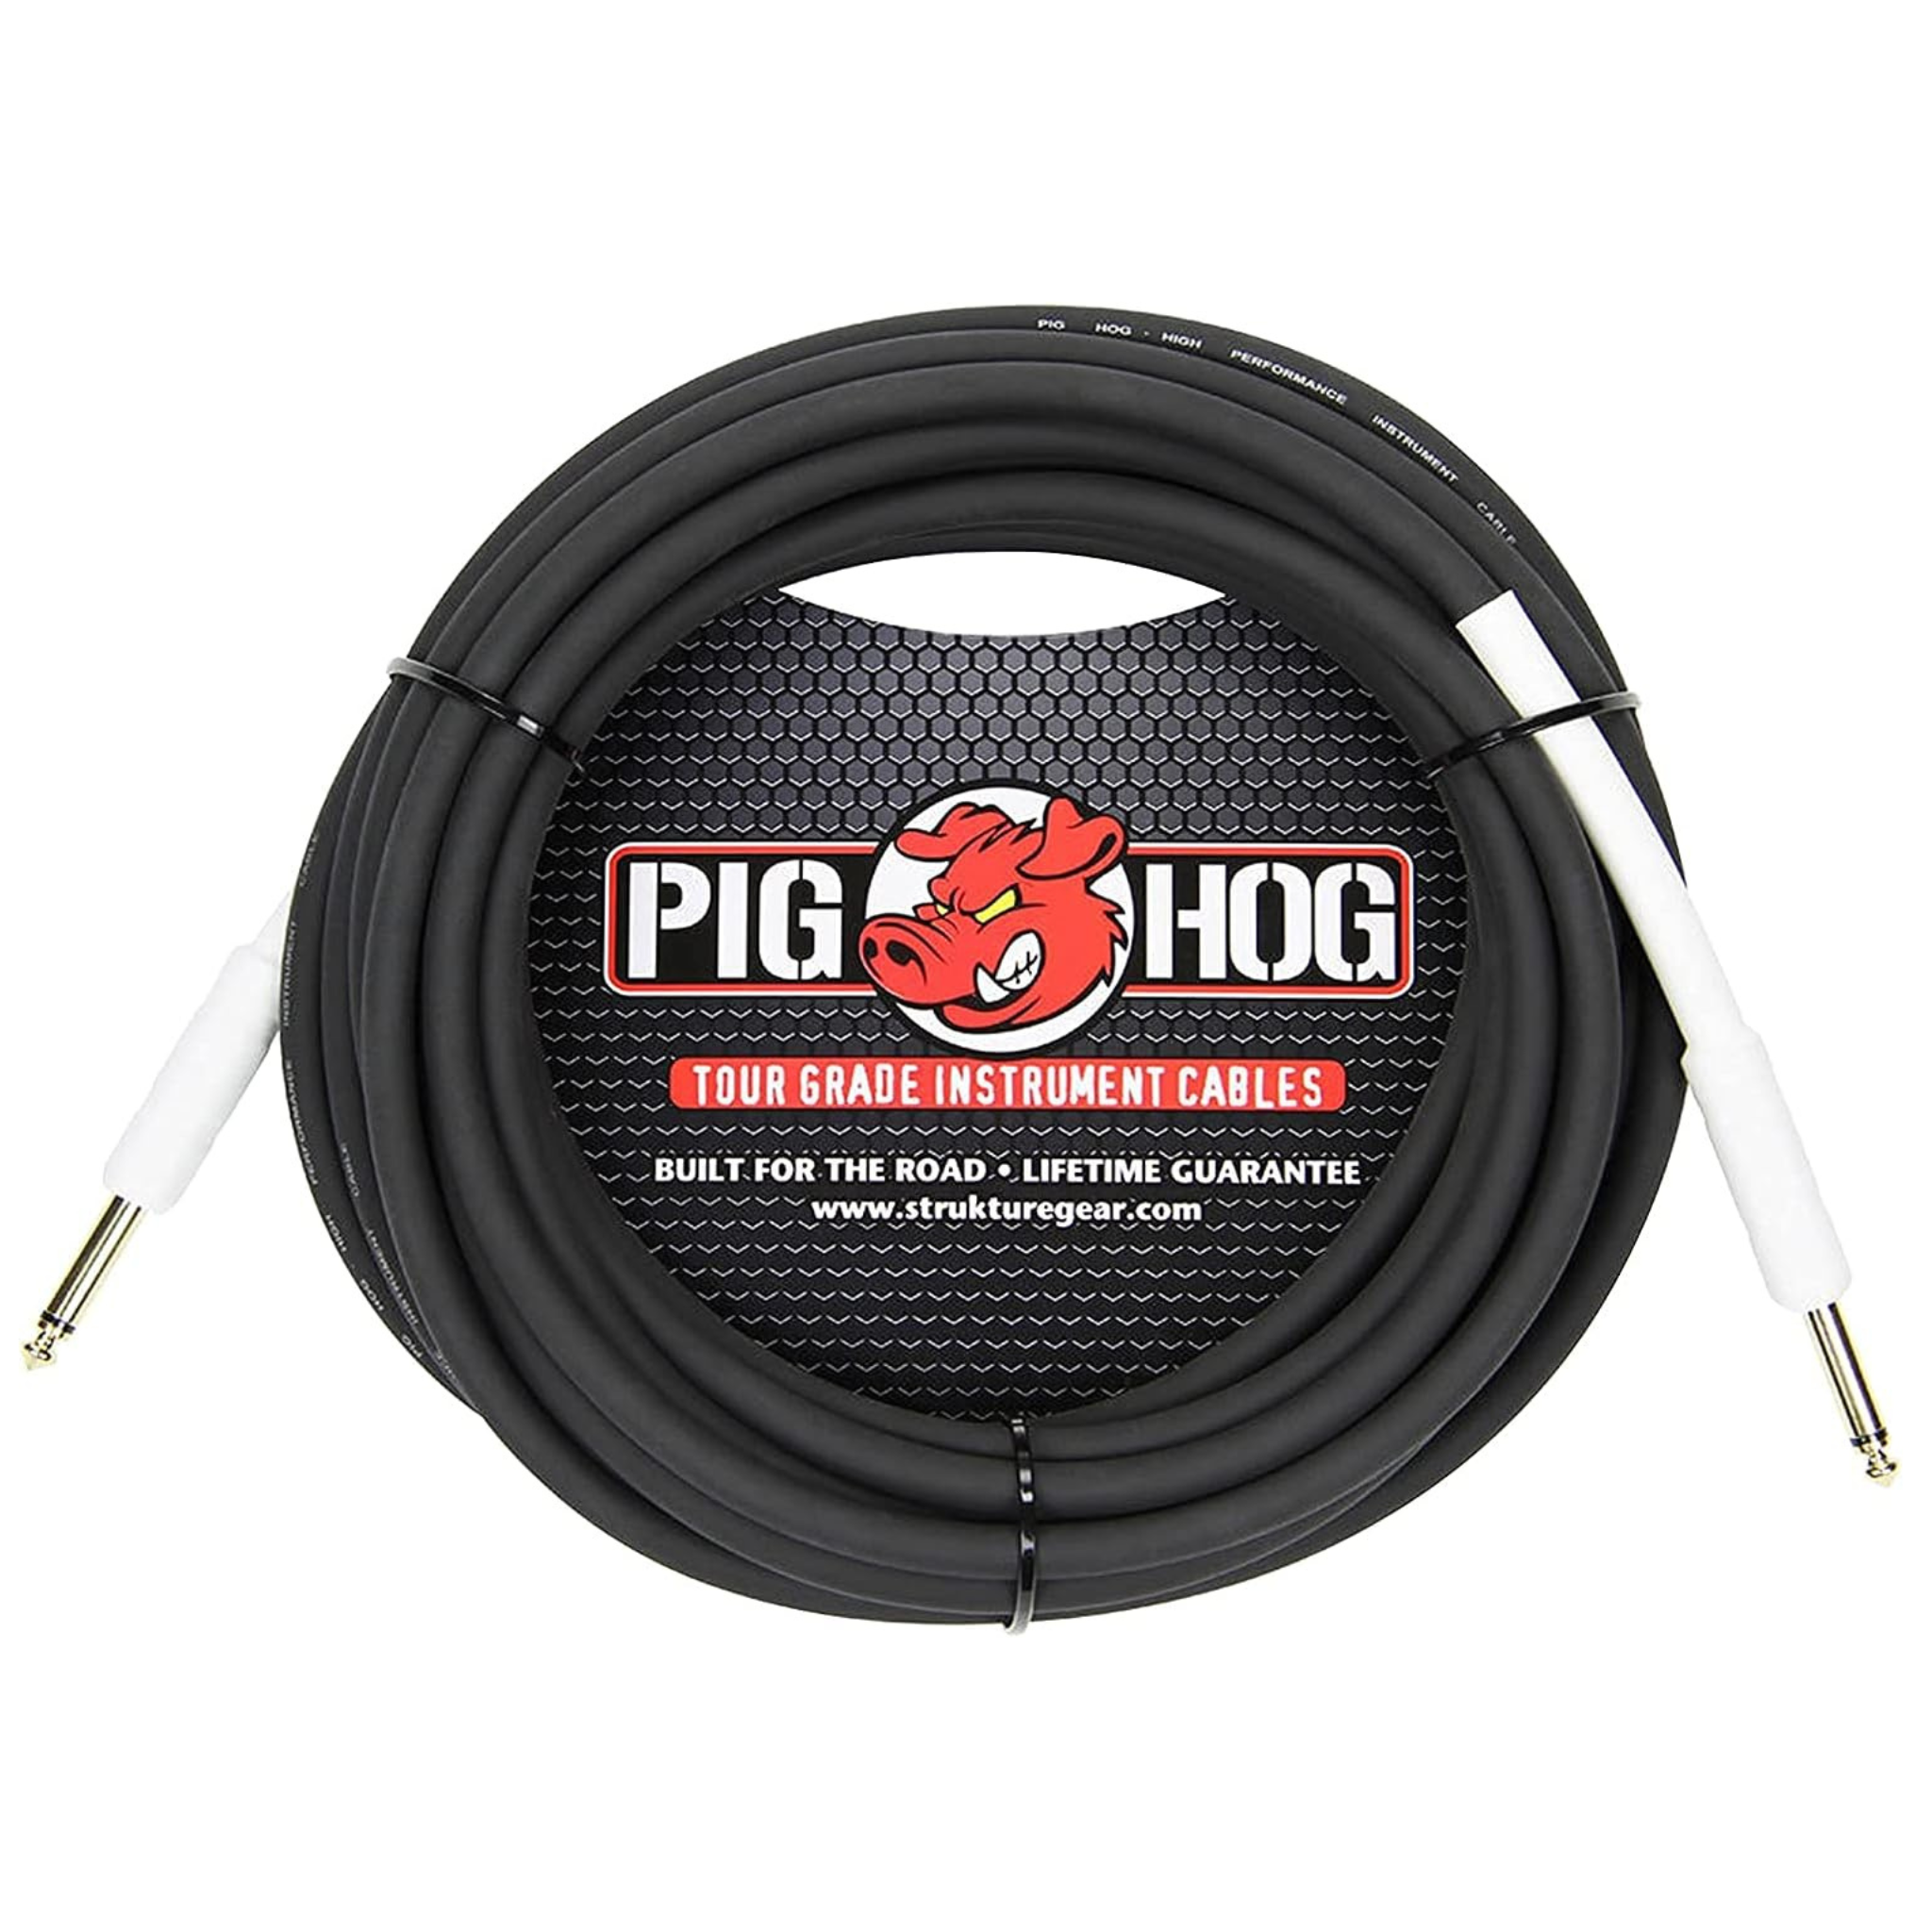 25' Pig Hog 8mm 1/4" Guitar Instrument Cable